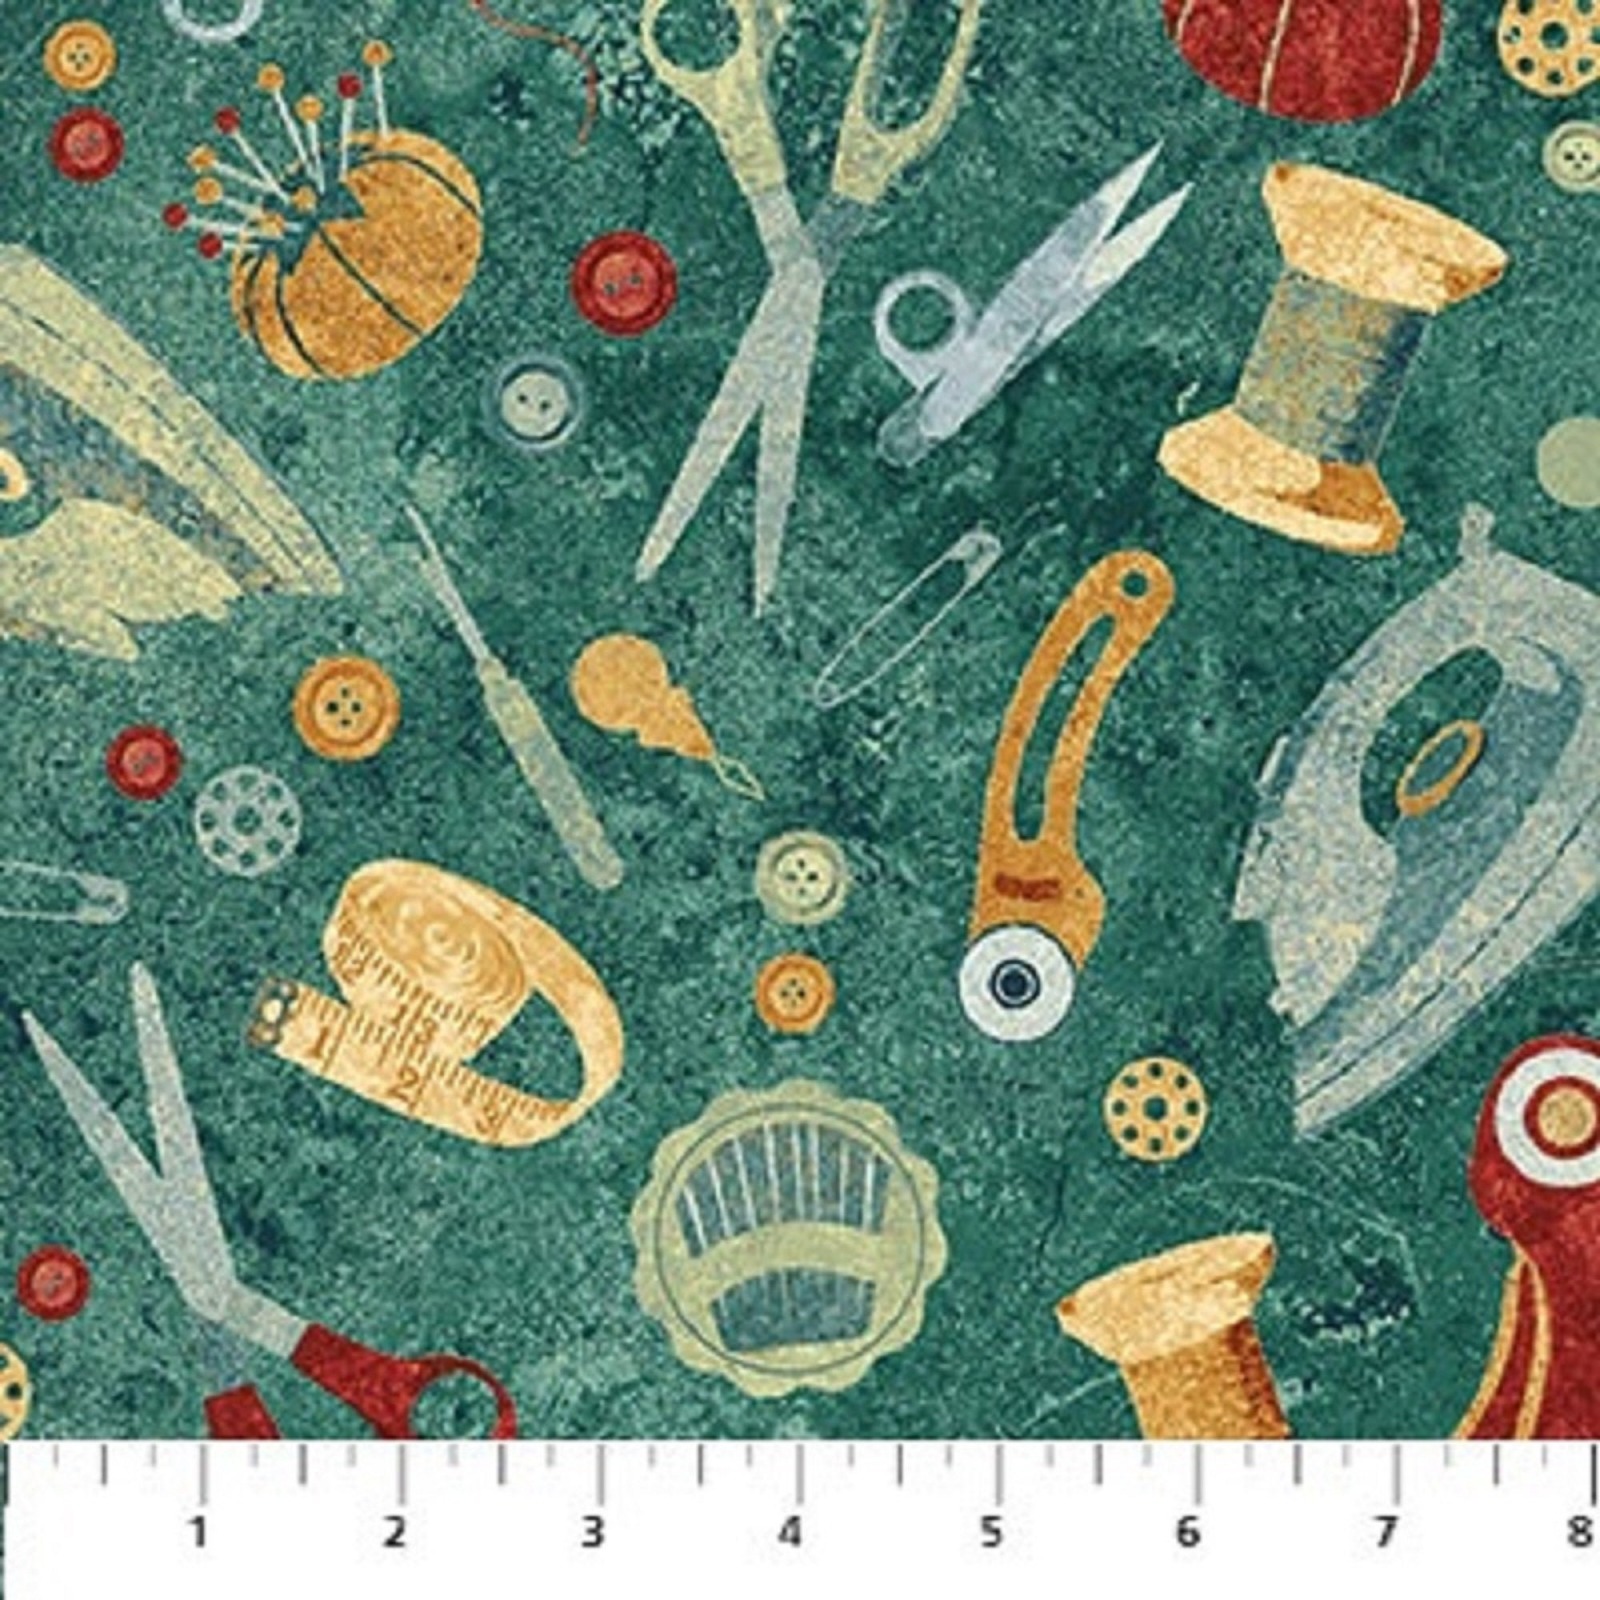 A Stitch in time | Northcott fabrics | Nähutensilien, grün | Baumwollstoff | Patchwork